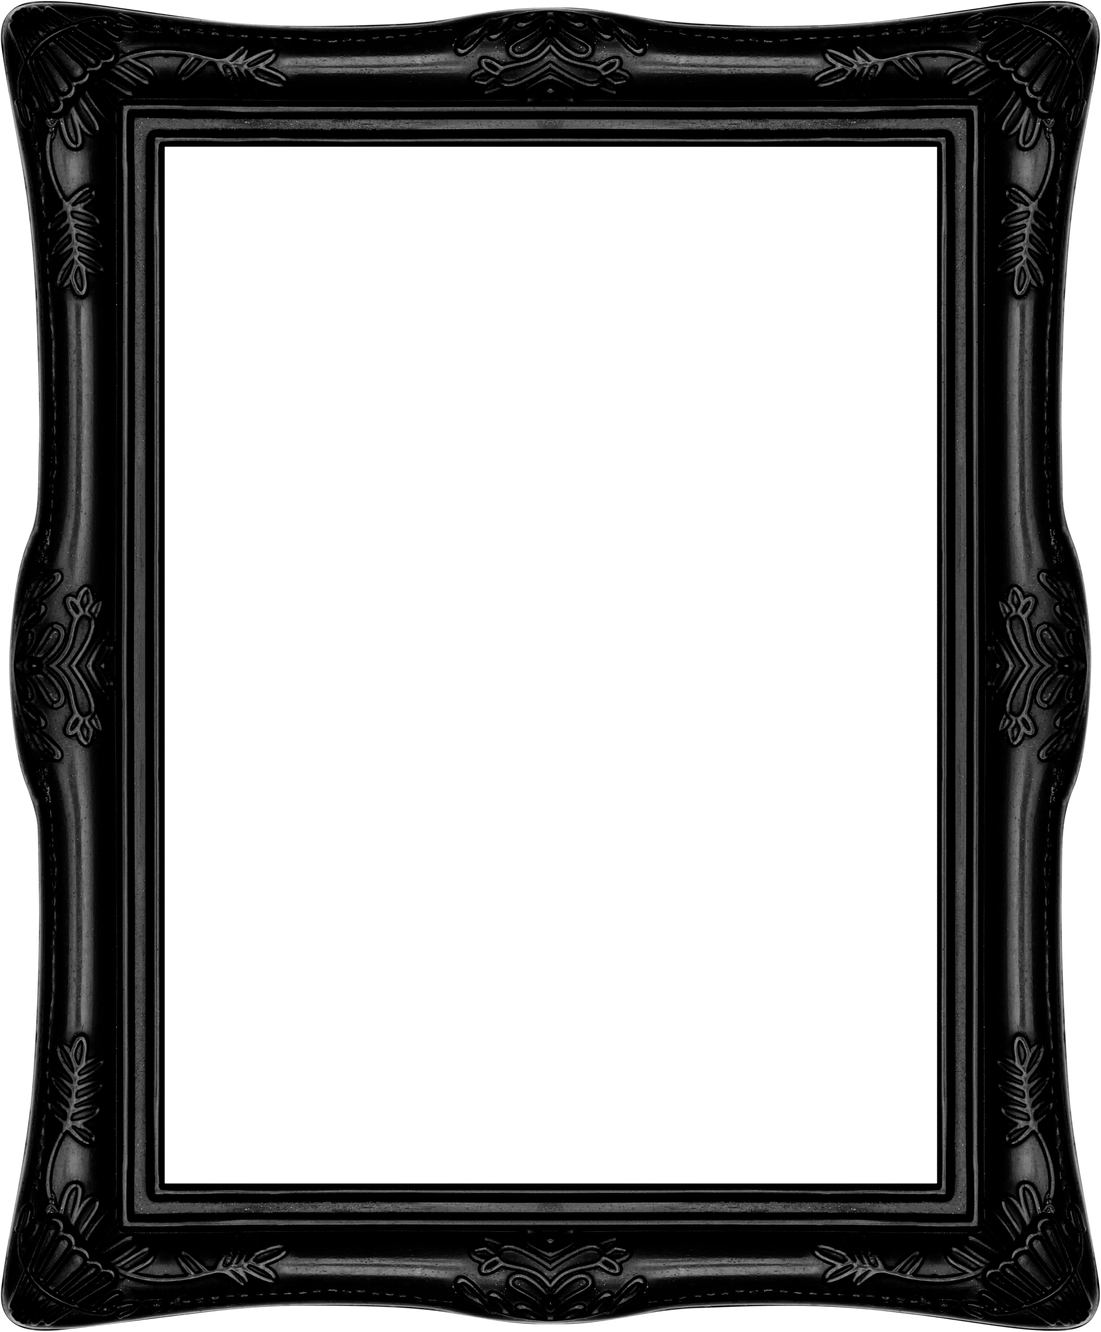 Classic Ornate Black Frame